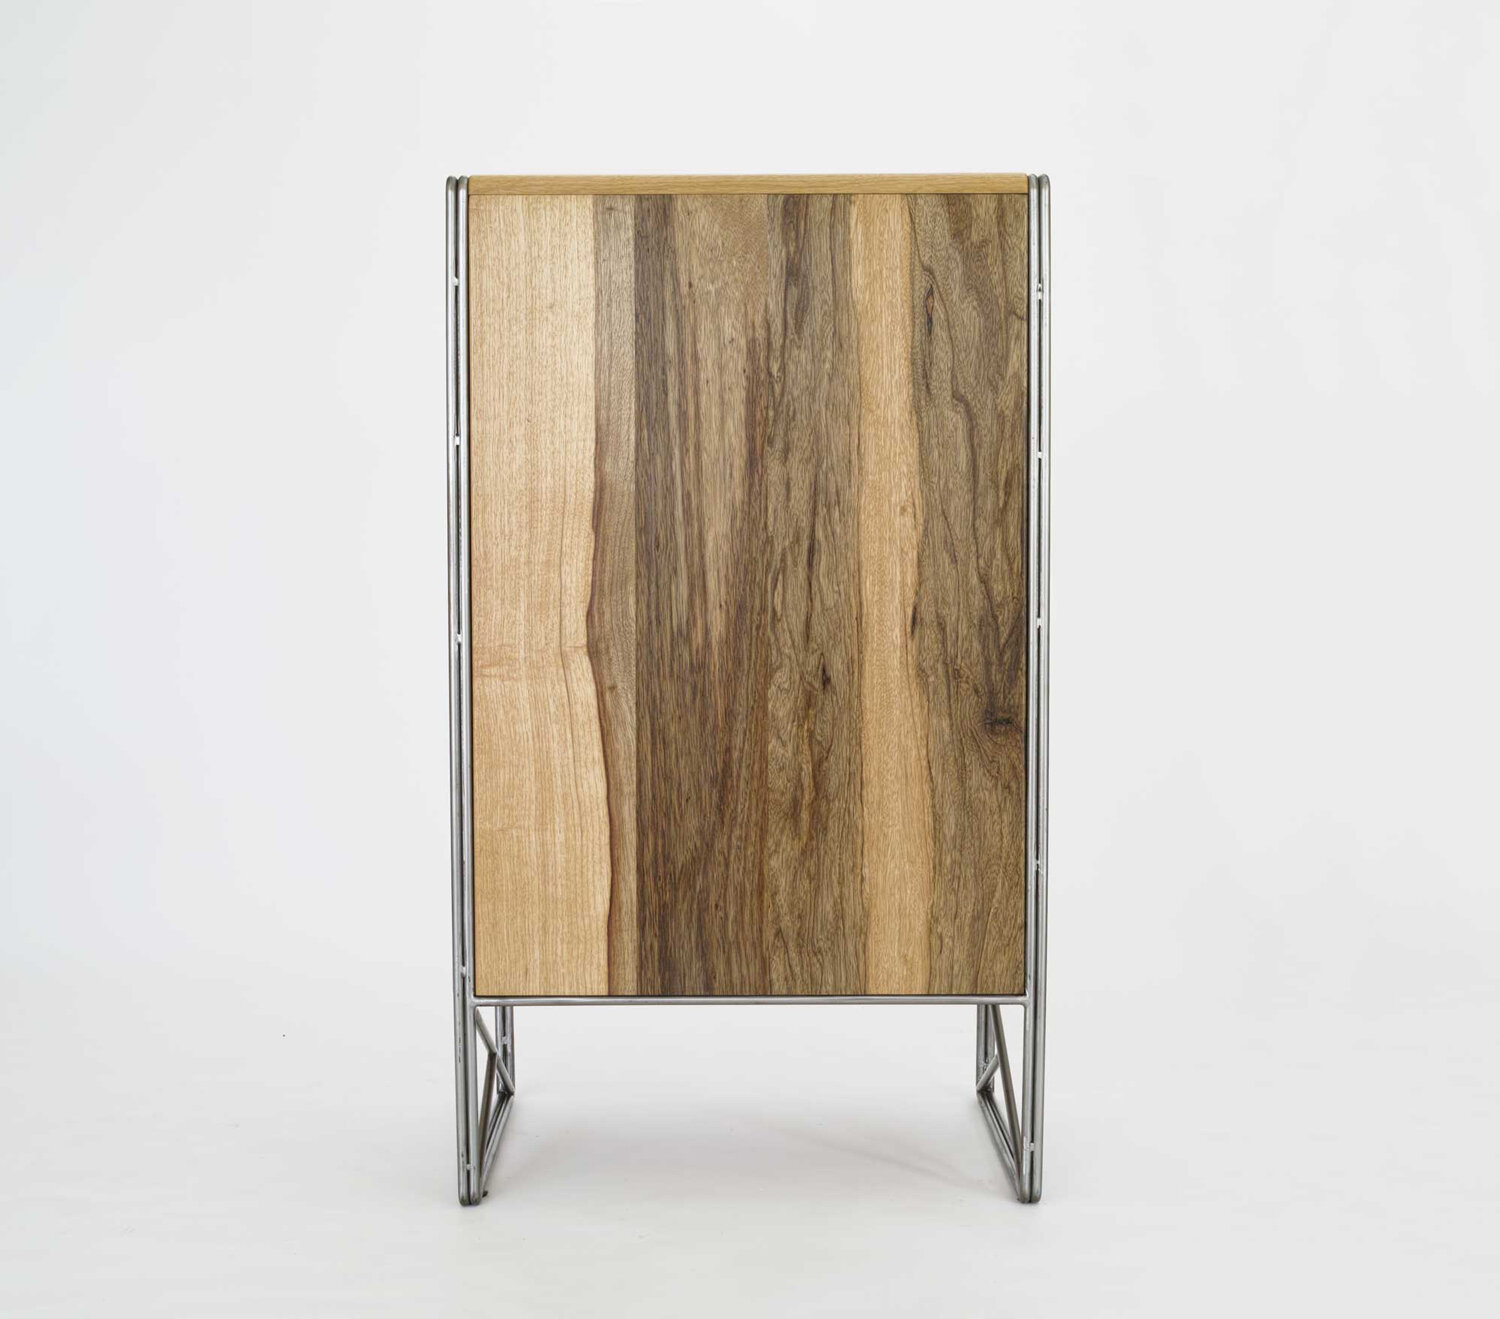 dorothy--chest-of-drawers-design-metal-and-wood-hand-made-custom-furniture-lebanon.jpg